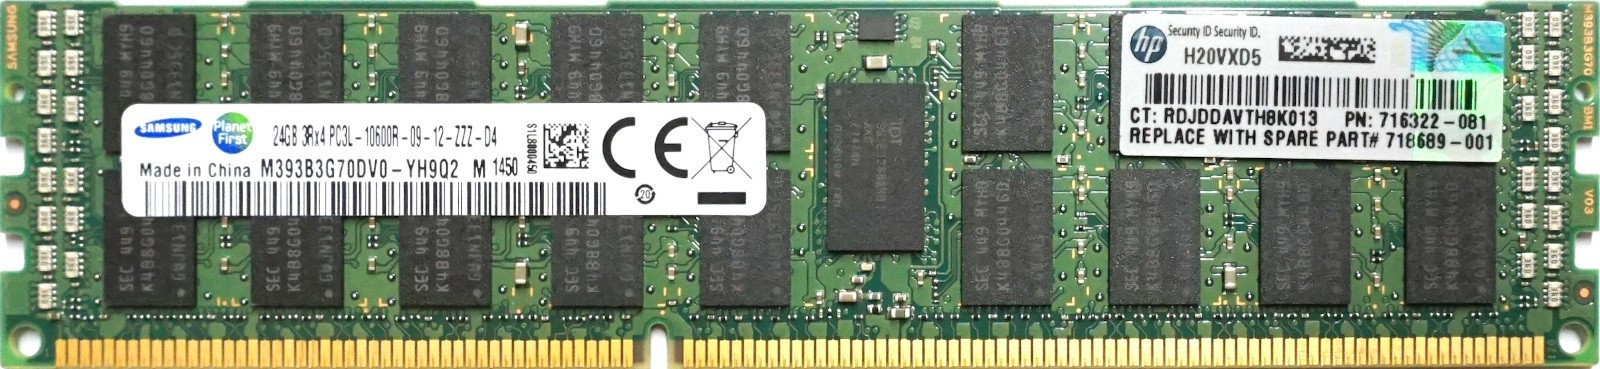 HP (716322-081) - 24GB PC3L-10600R (DDR3 Low-Power-1333MHz, 3RX4)